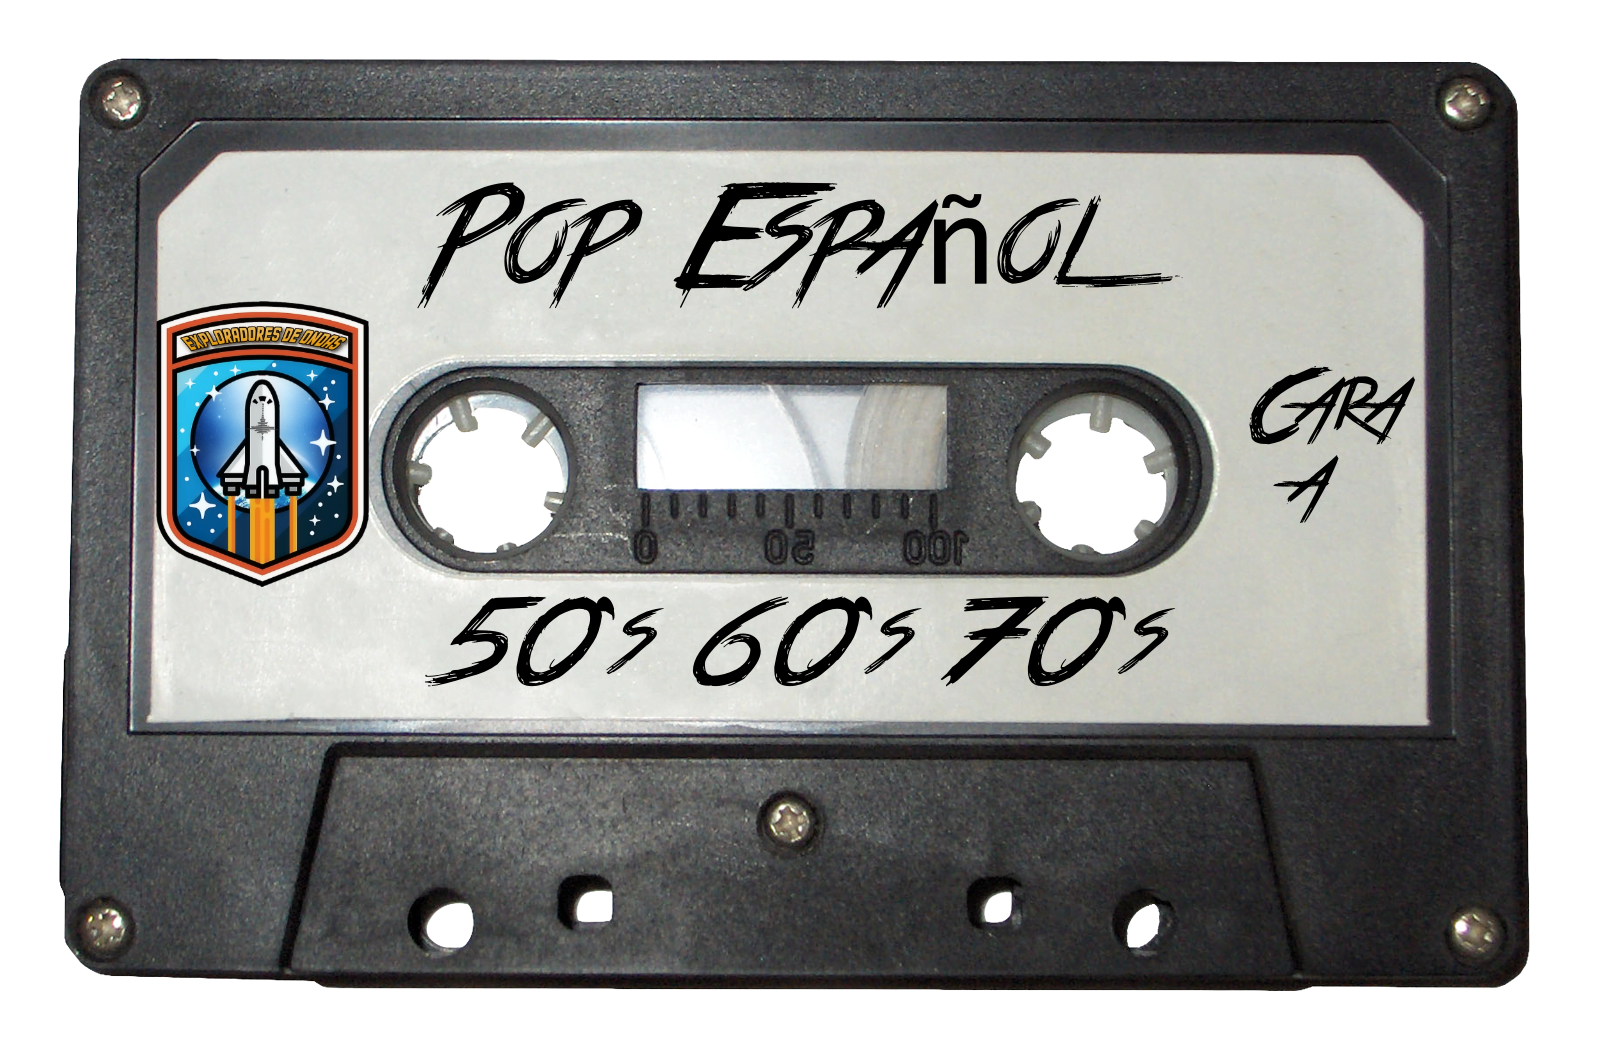 Pop español casete